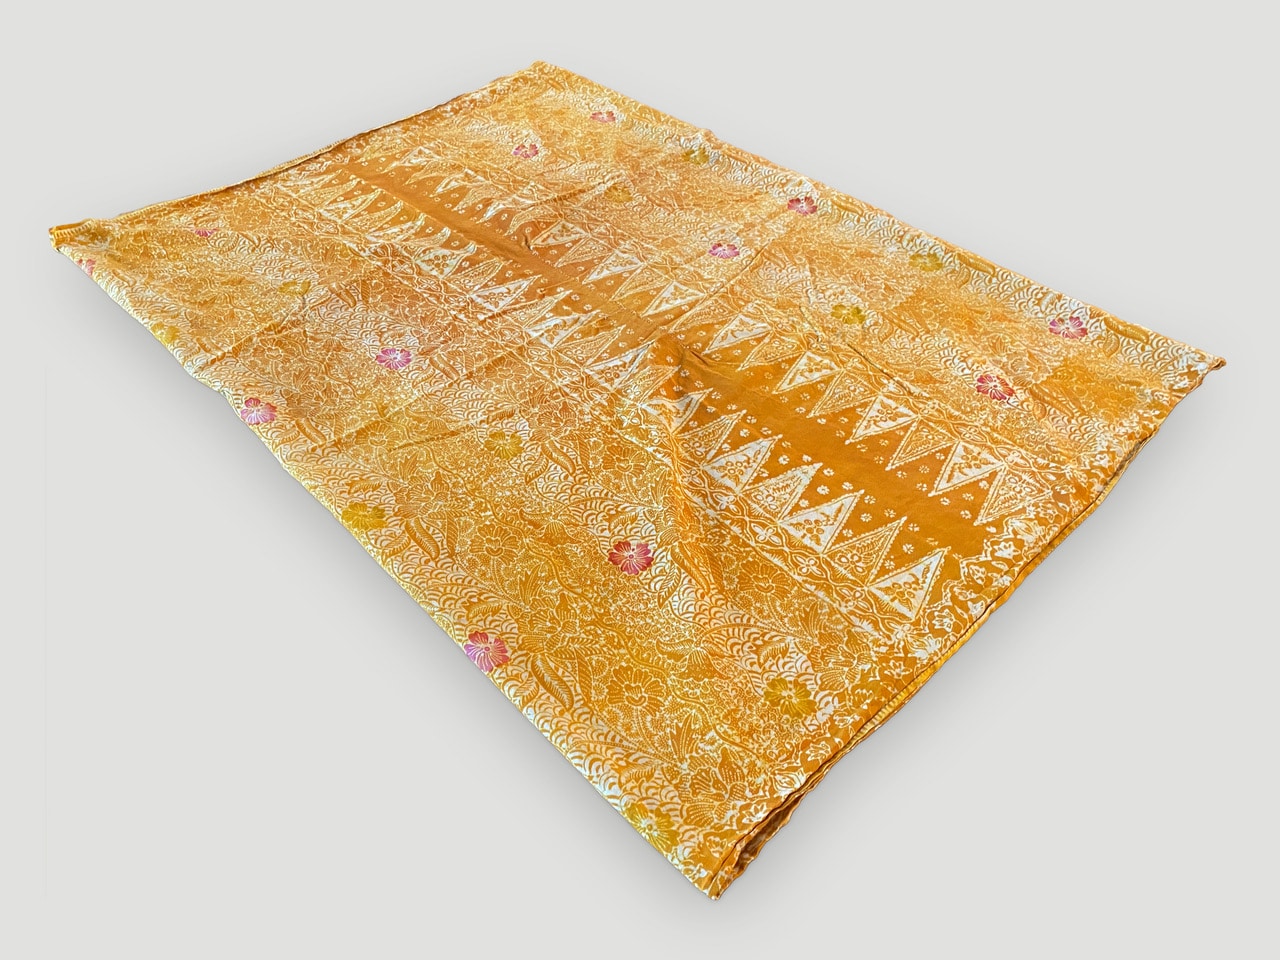 balinese sarong